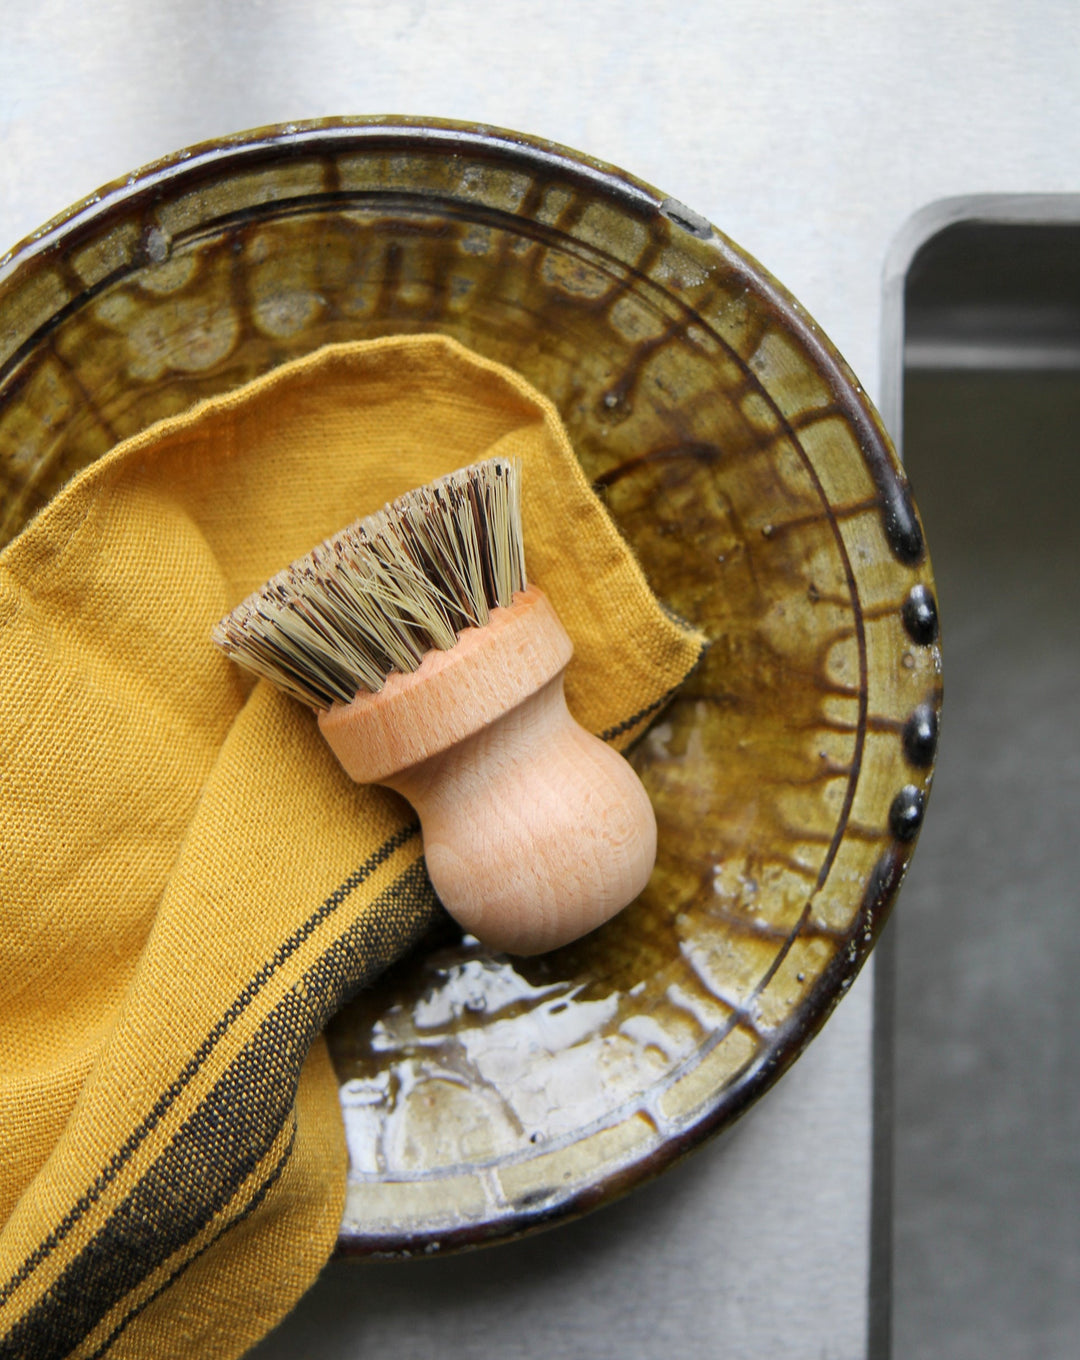 redecker wooden pot brush for washing up